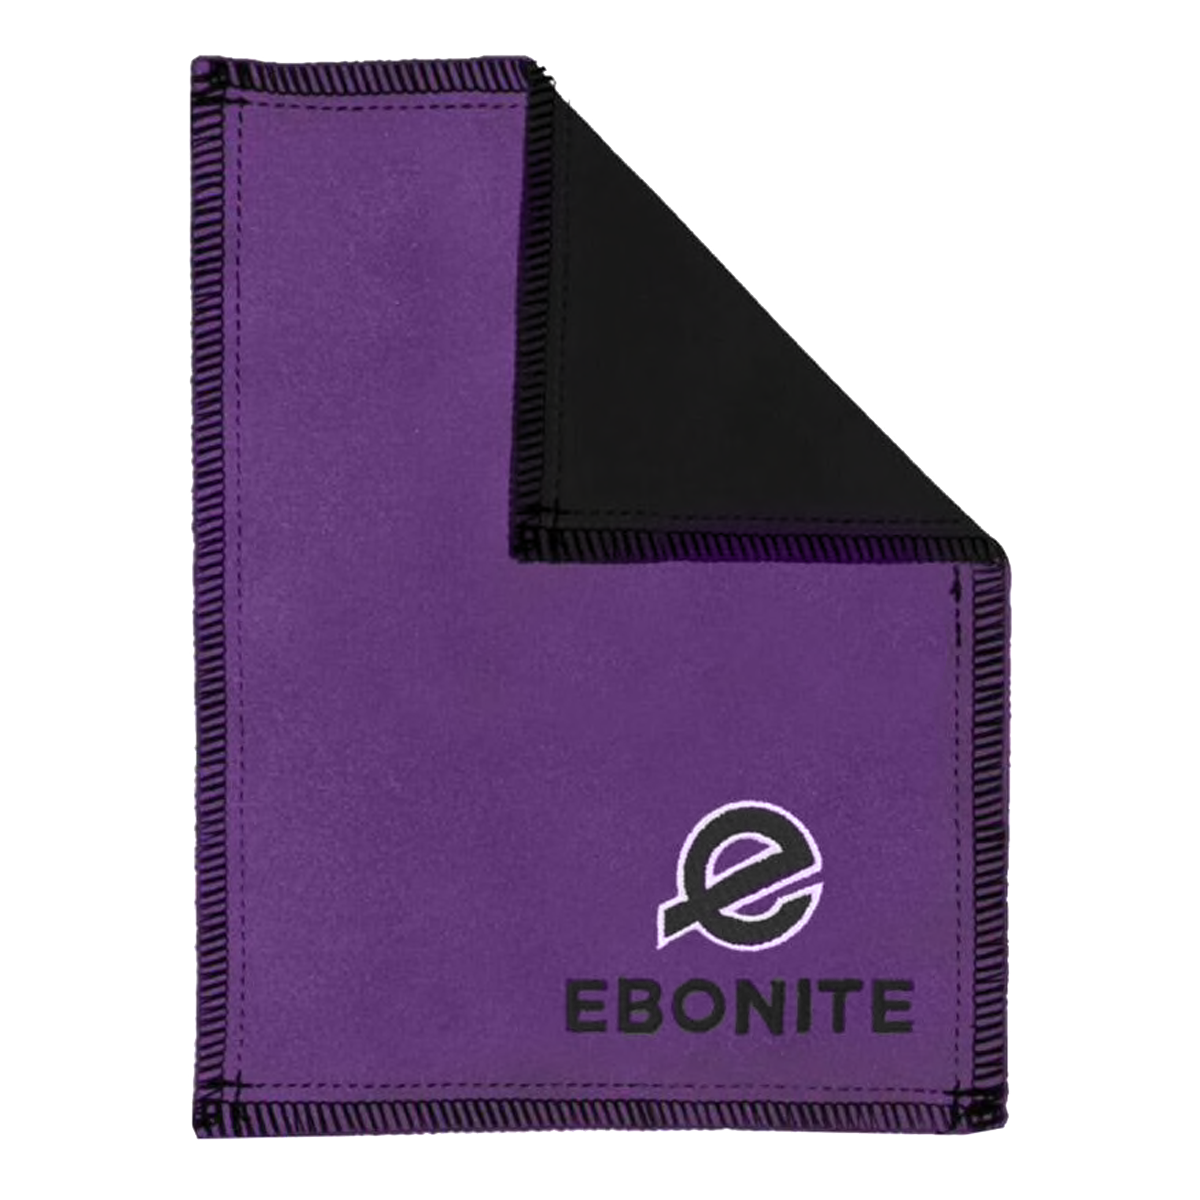 Ebonite Purple/Black Shammy Pad